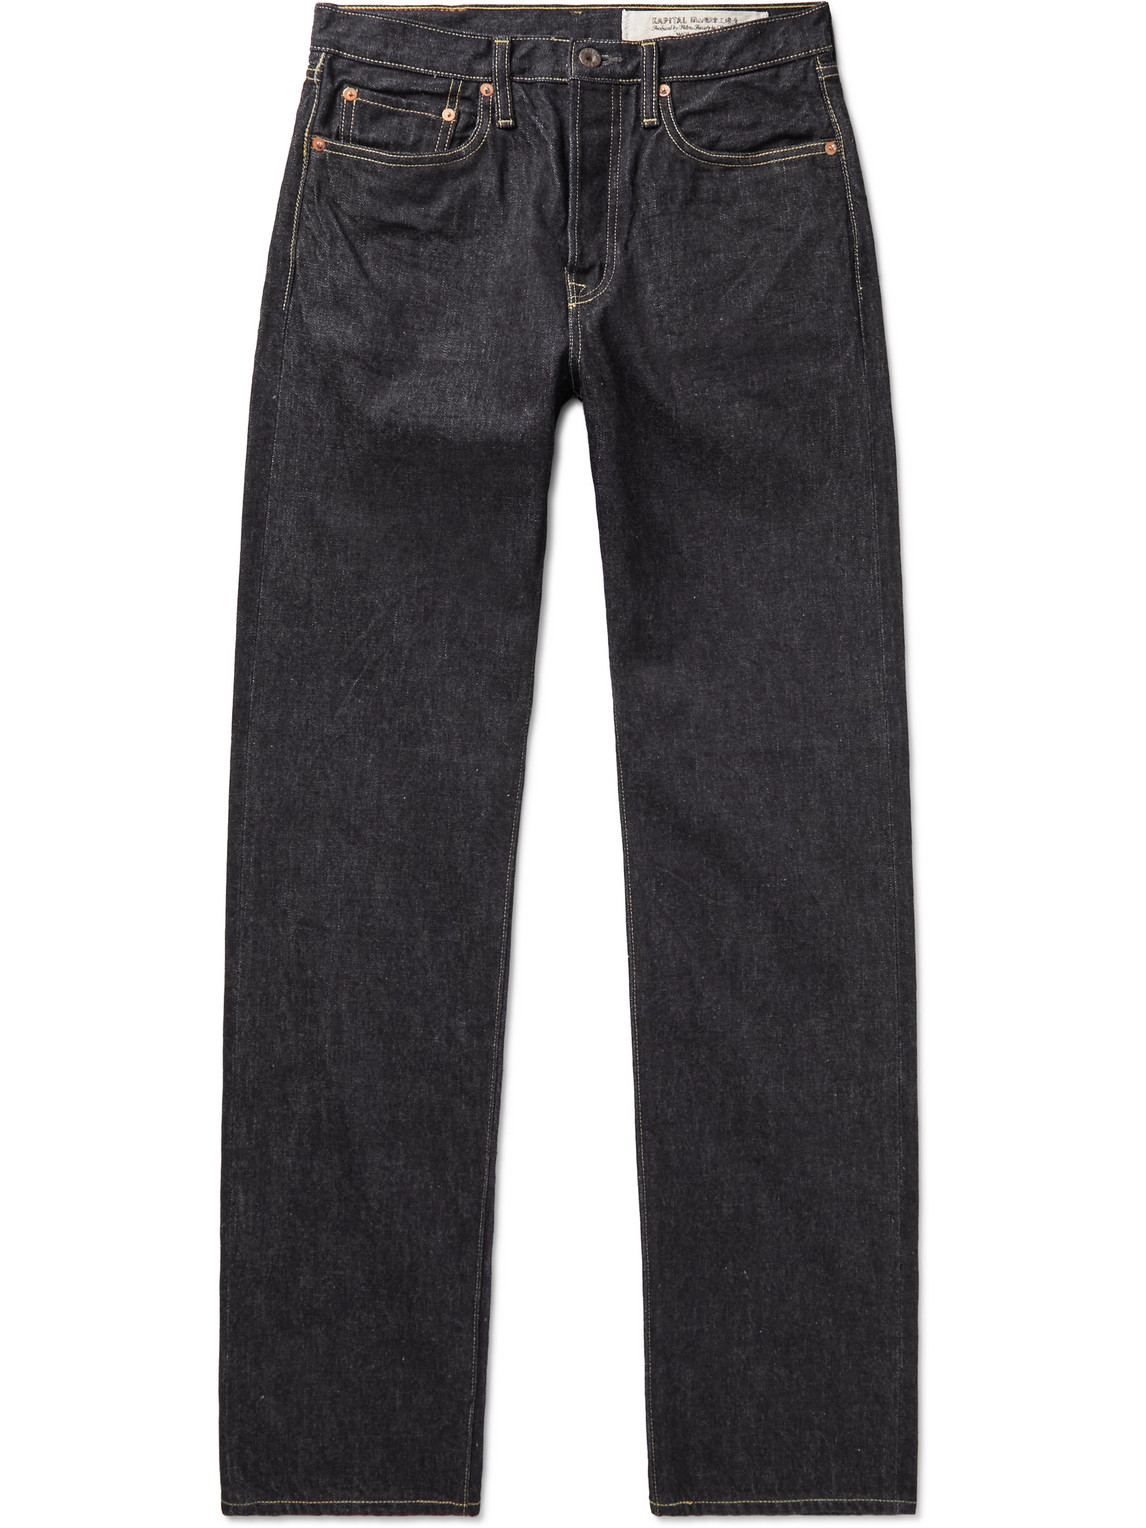 Monkey CISCO Slim-Fit Jeans